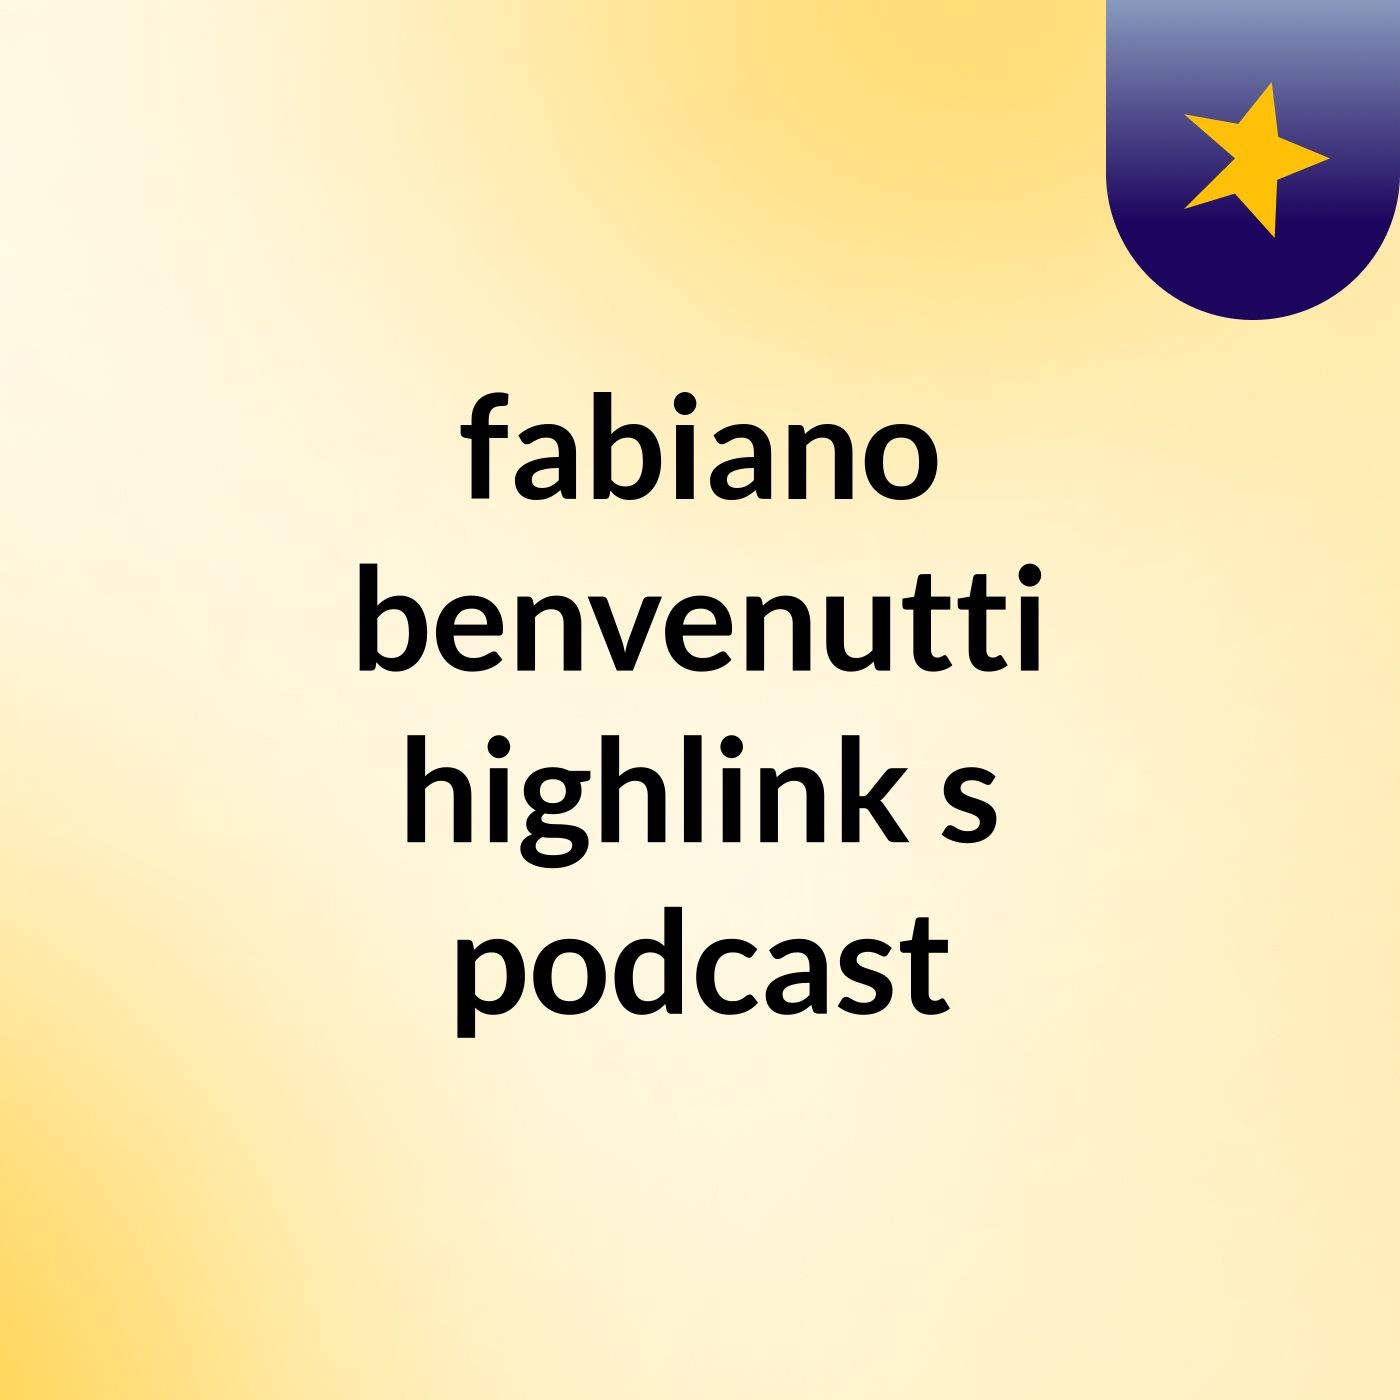 fabiano benvenutti highlink's podcast